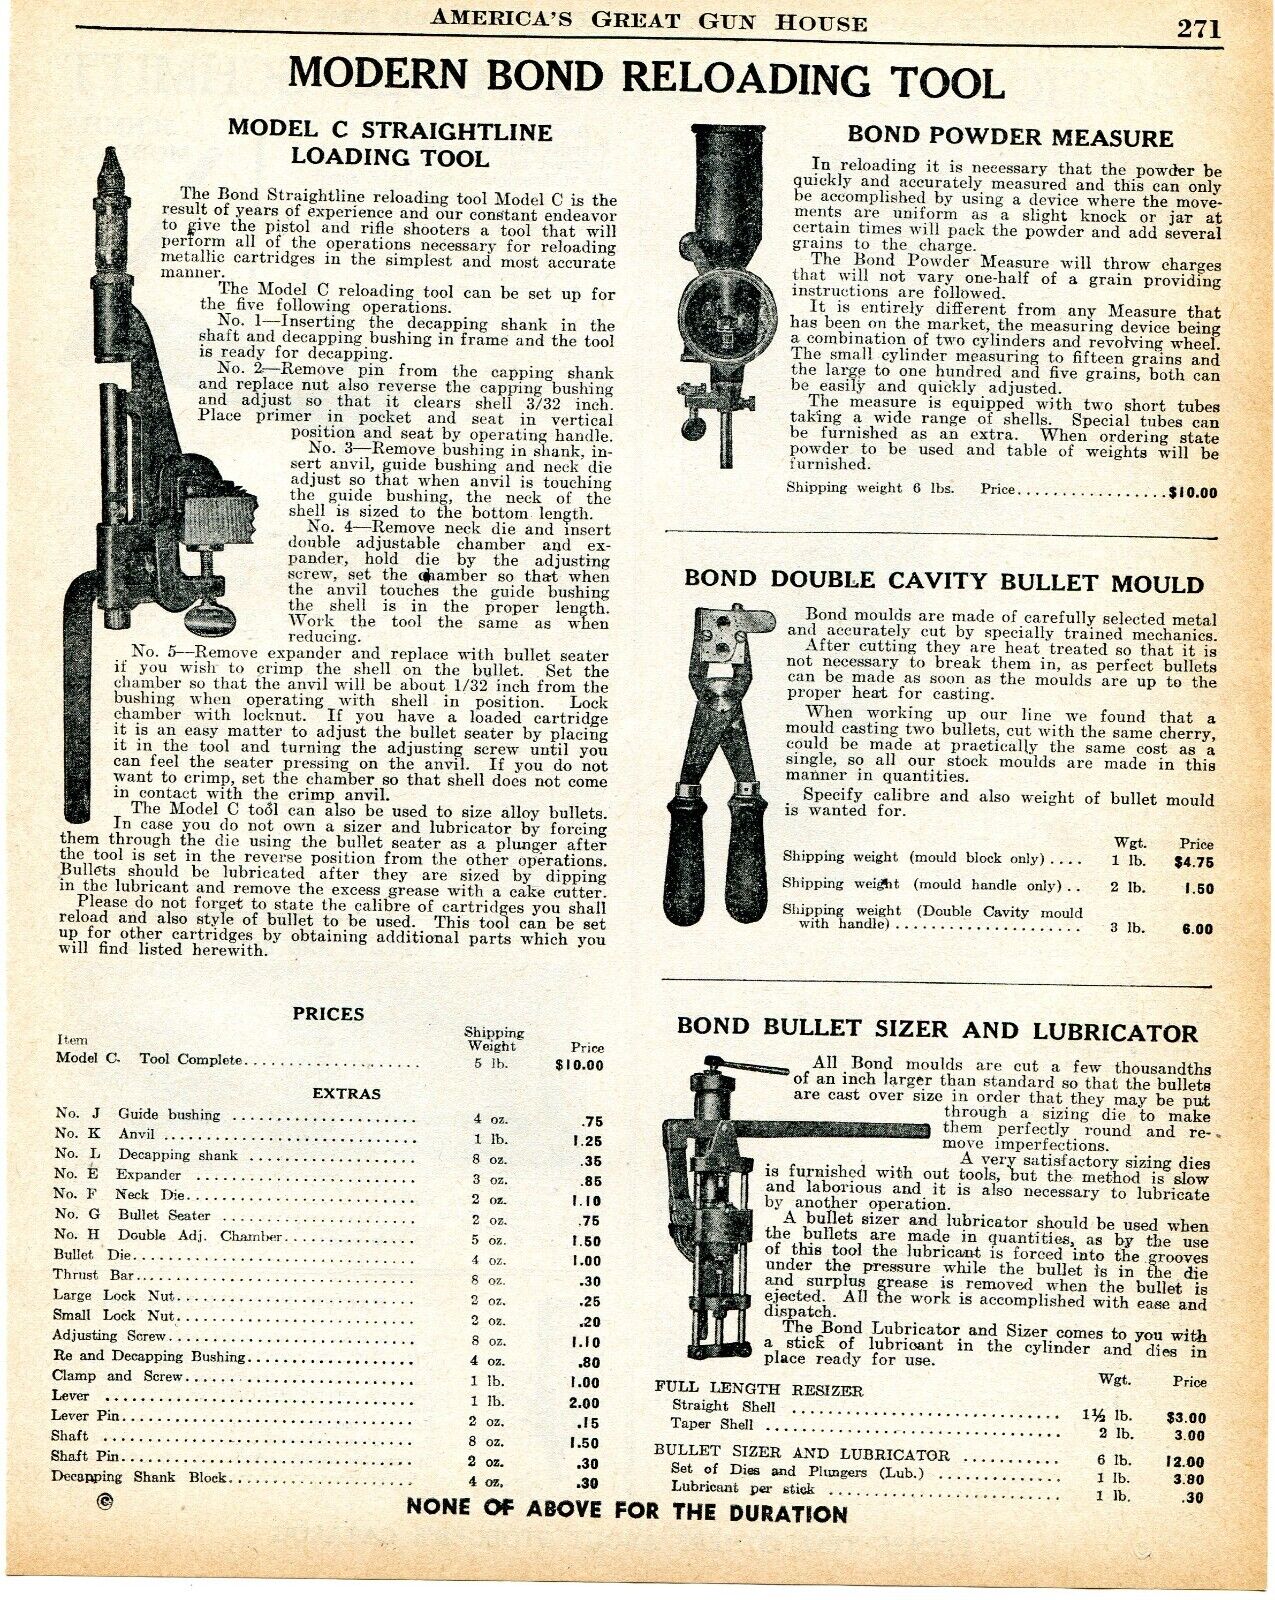 1945 Print Ad of Bond Model C Ammunition Reloading Tool, Bullet Sizer Lubricator